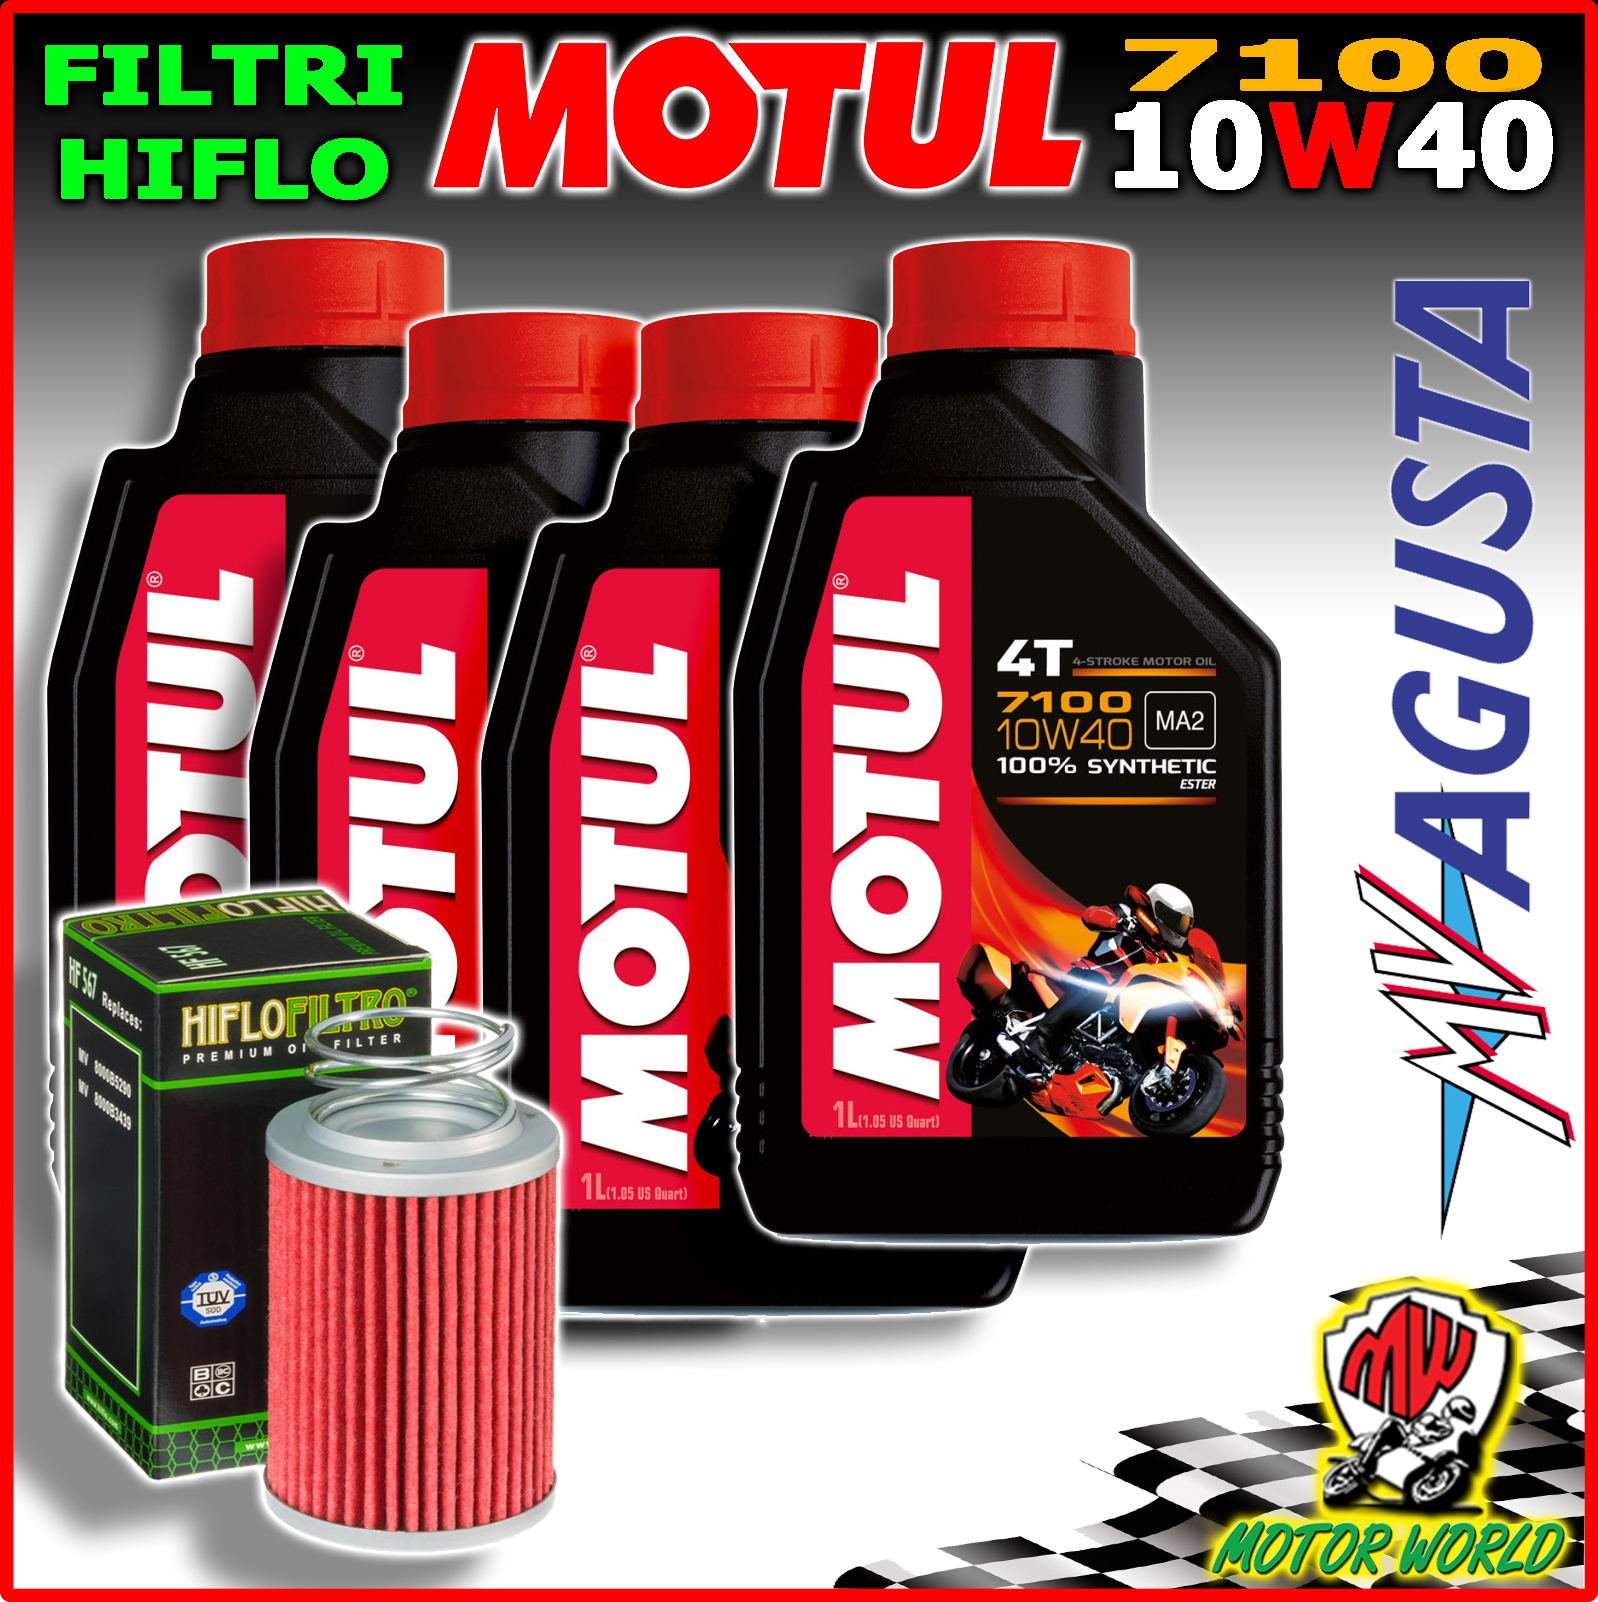 Aceite Motul 10w40 7100 100% Sintético Para Moto 4t 12litros